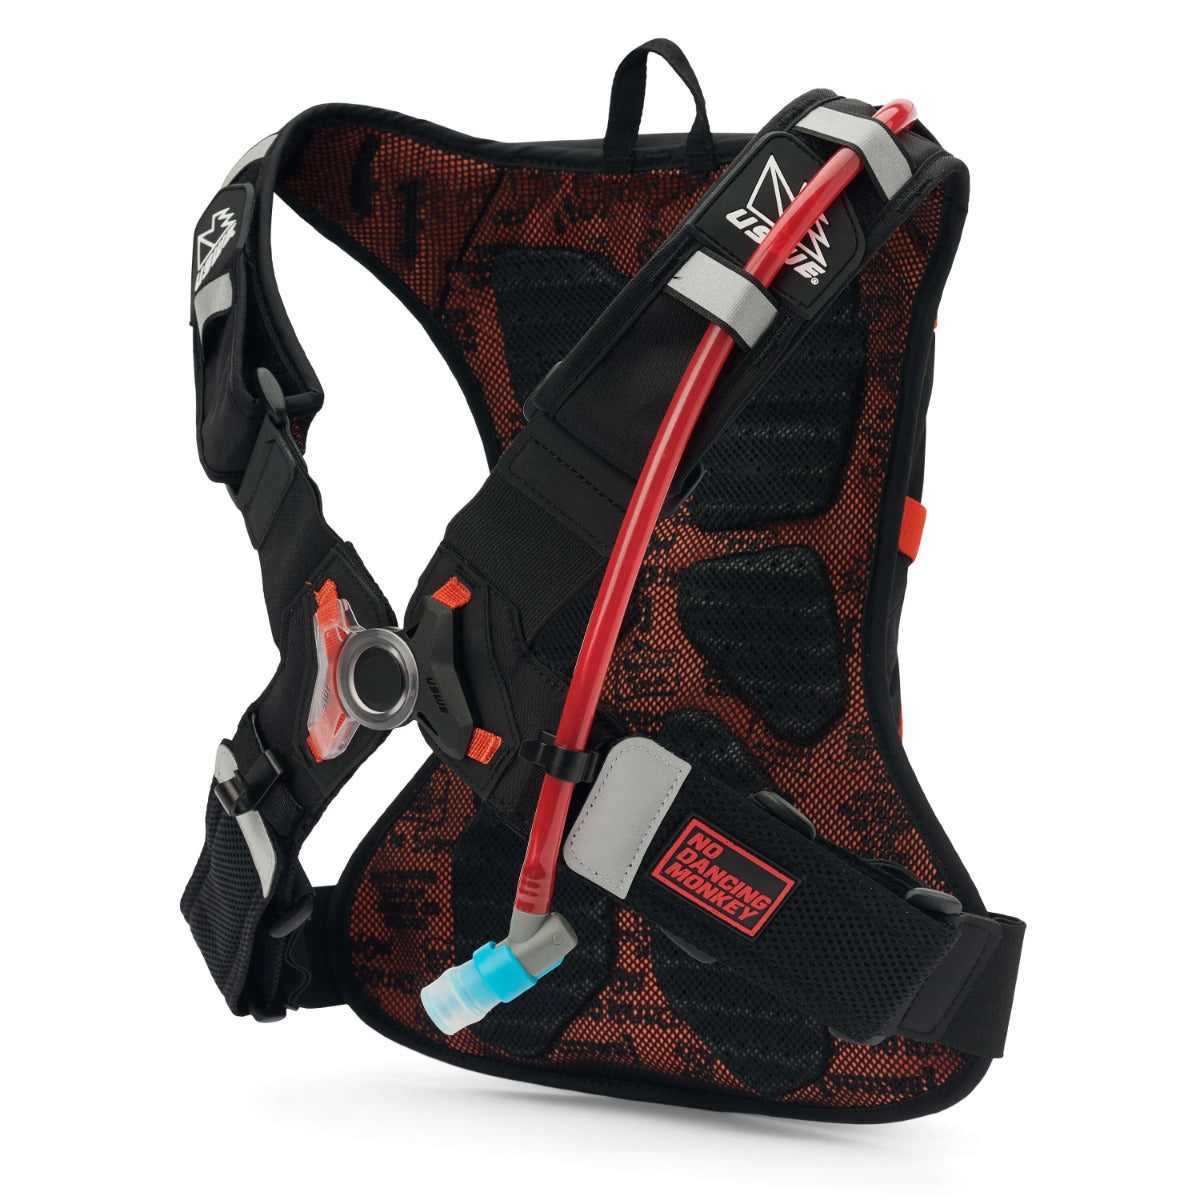 USWE RAW 4 Hydration Backpack Black Orange – With 3 Litre Bladder